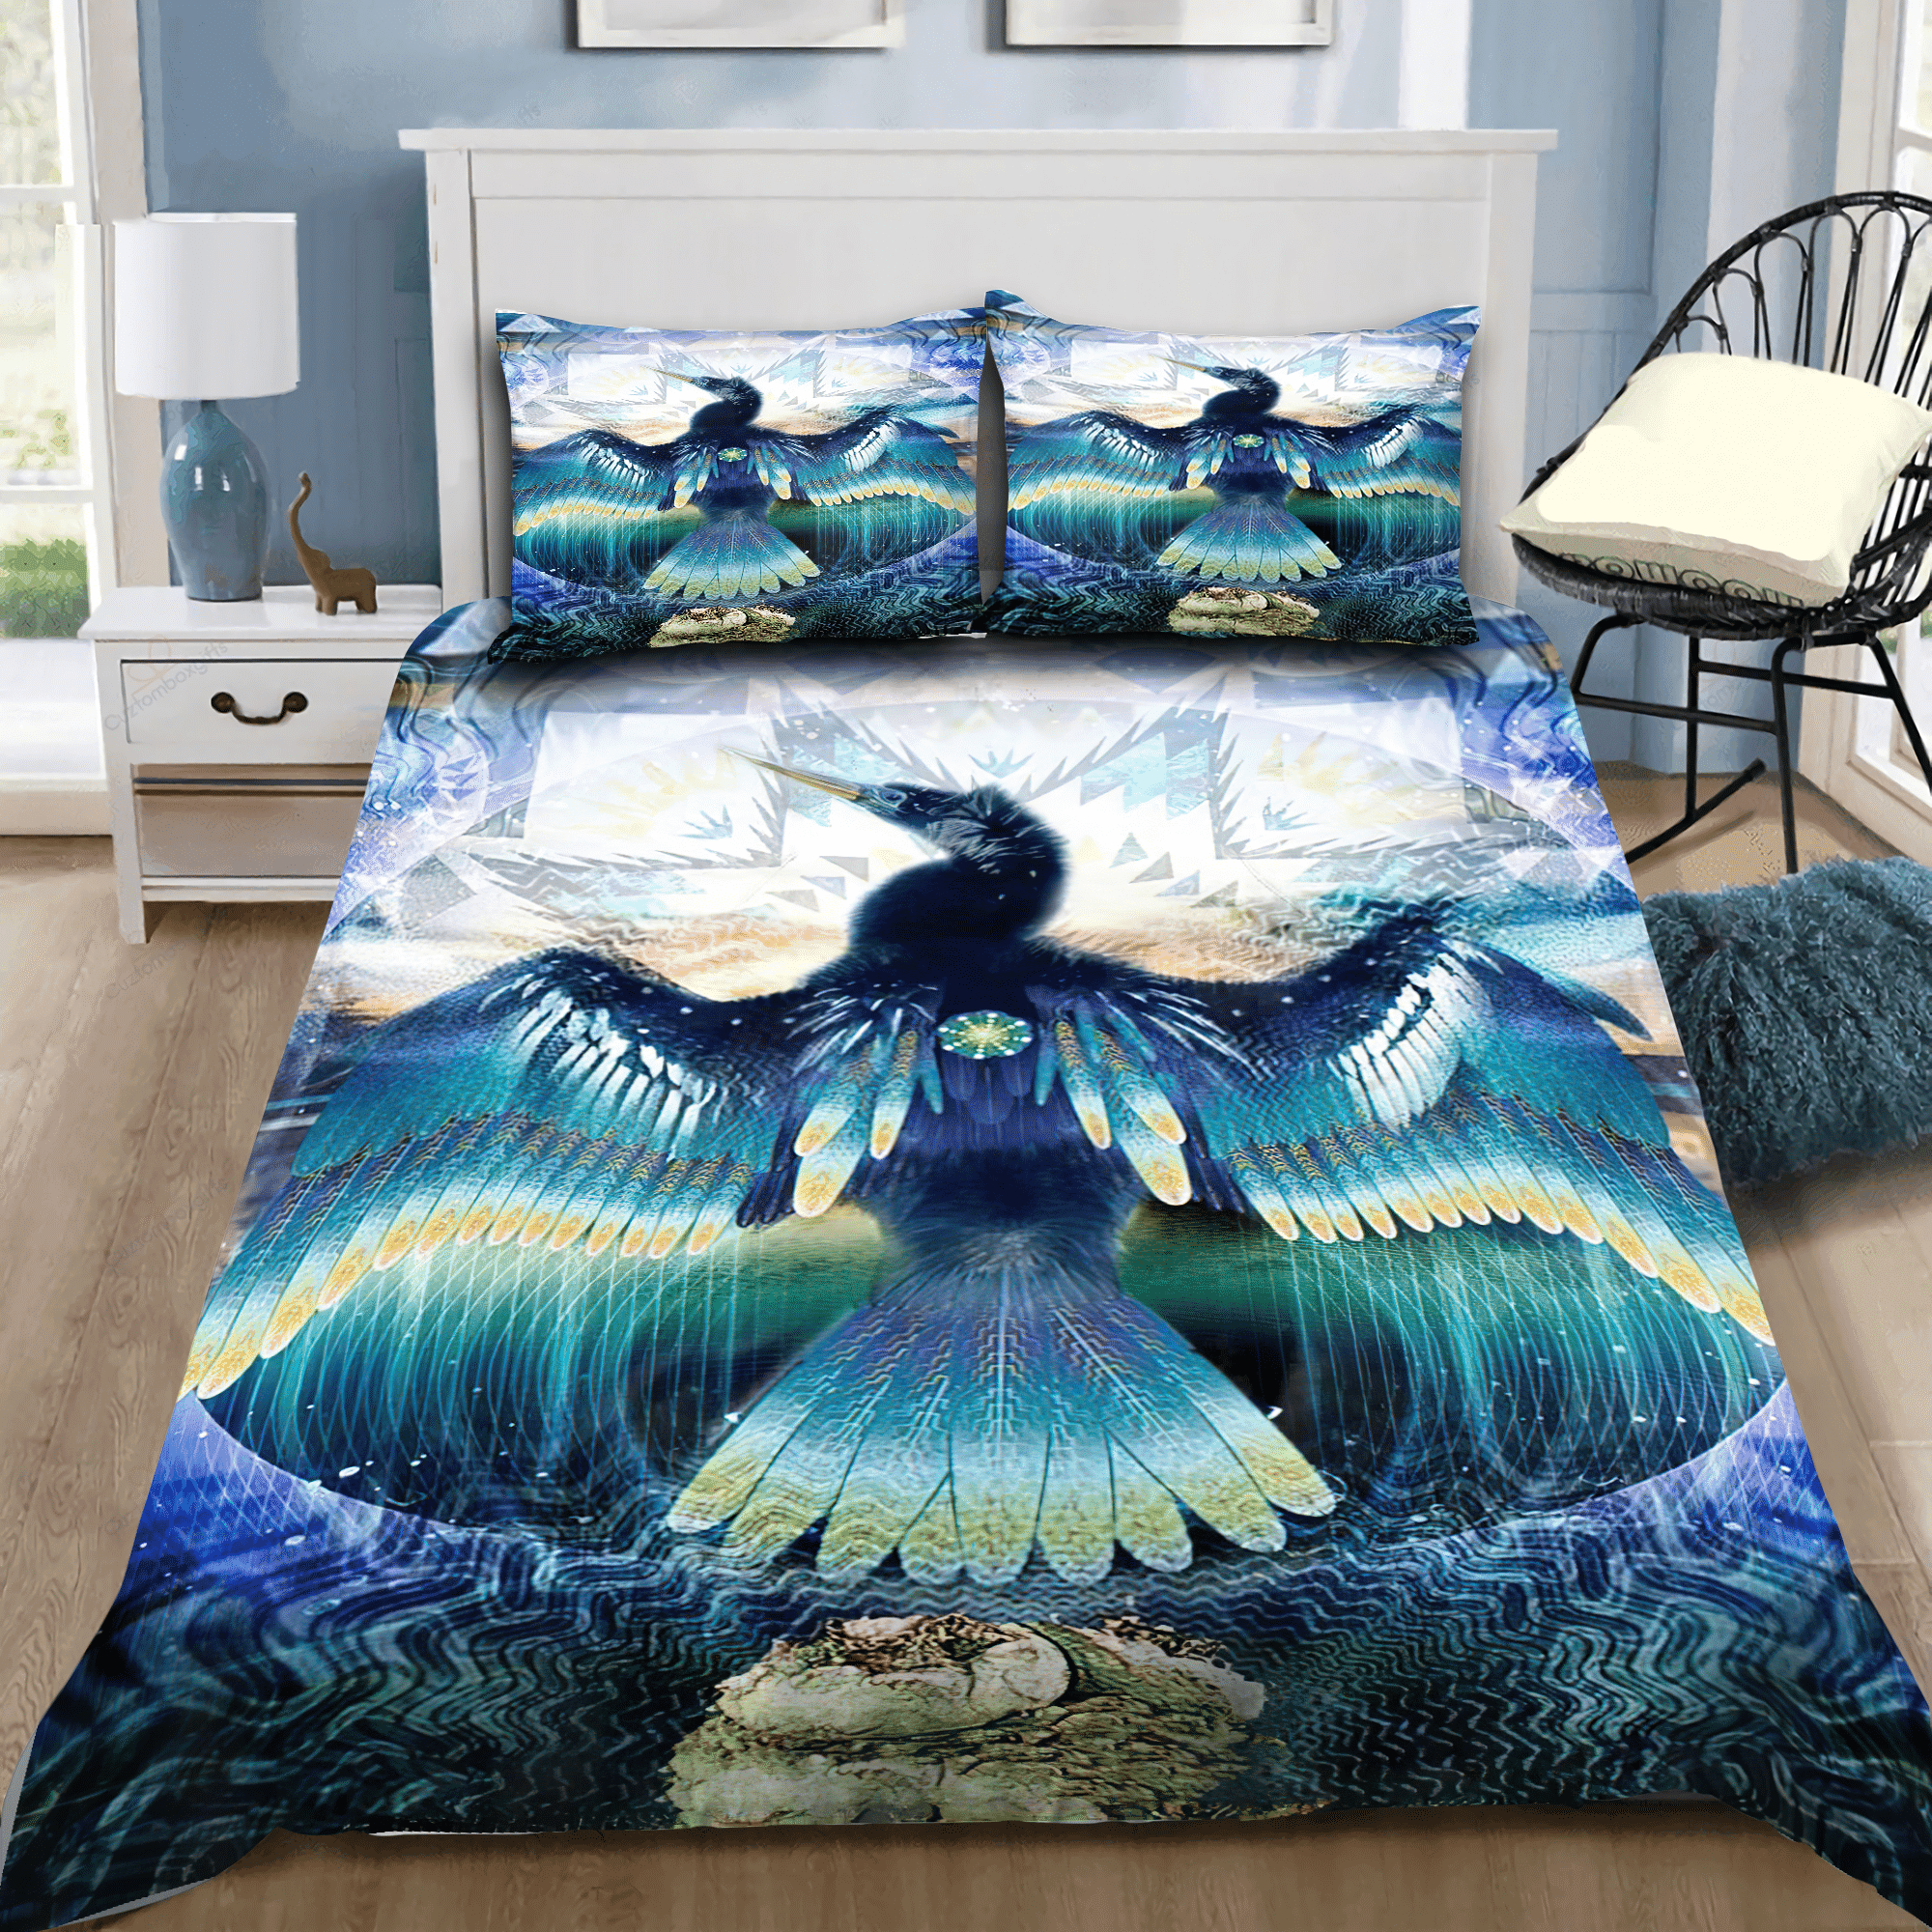 blue bird indigenous american duvet cover bed set 0a8ay